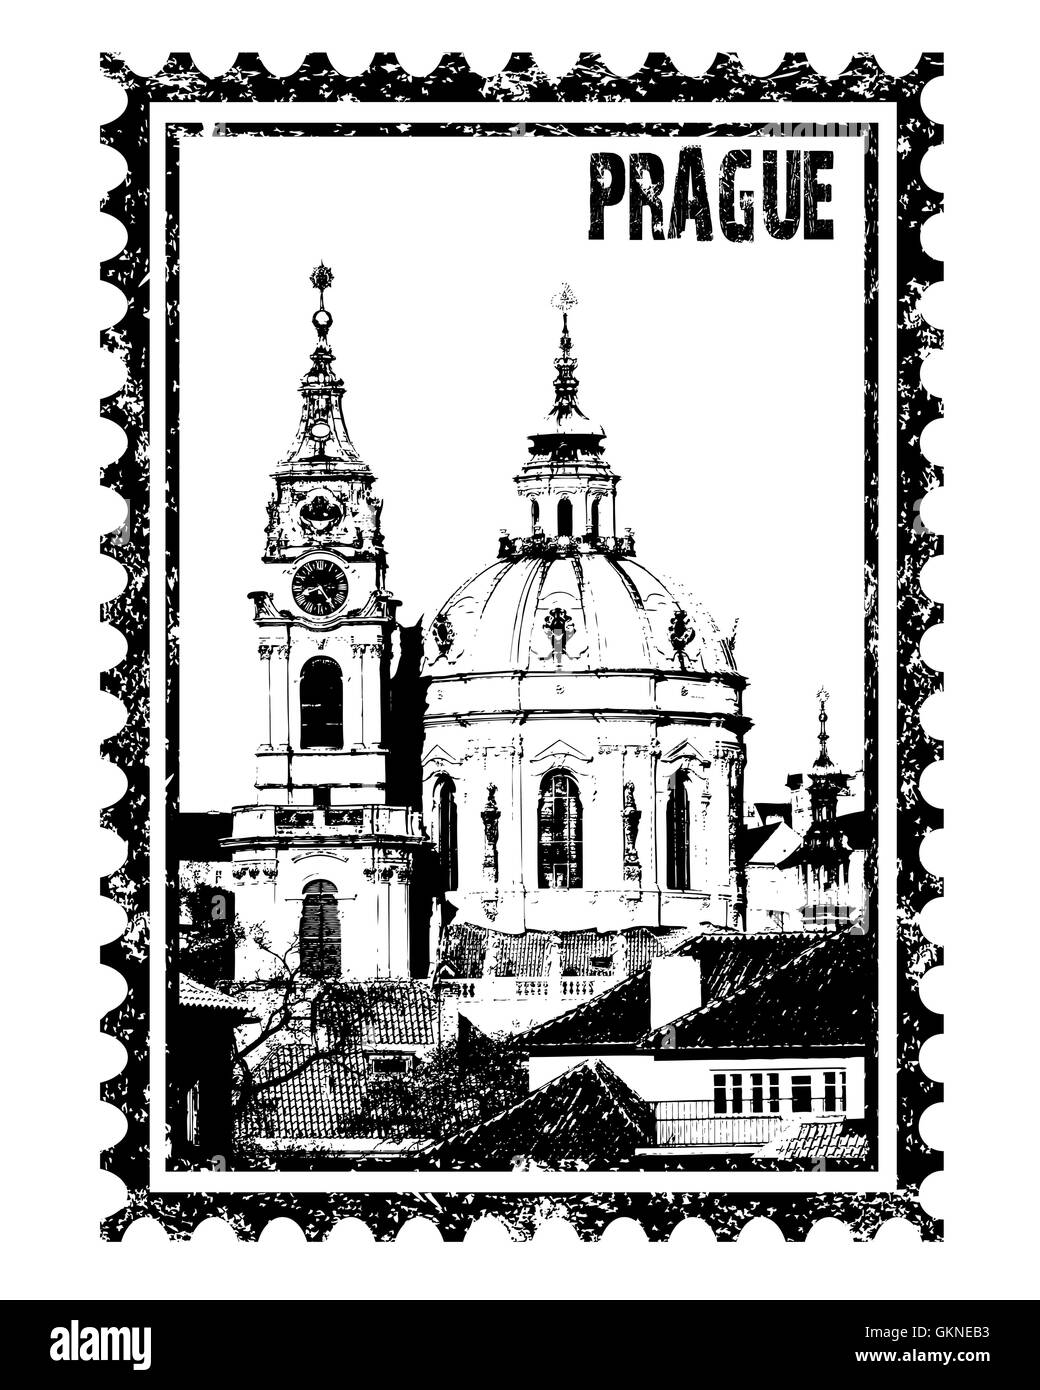 berühmte Prager Platz Wahrzeichen Vektor Tschechische Turm Reisen Kirche berühmte Kuppel Tourismus Barock Stock Vektor